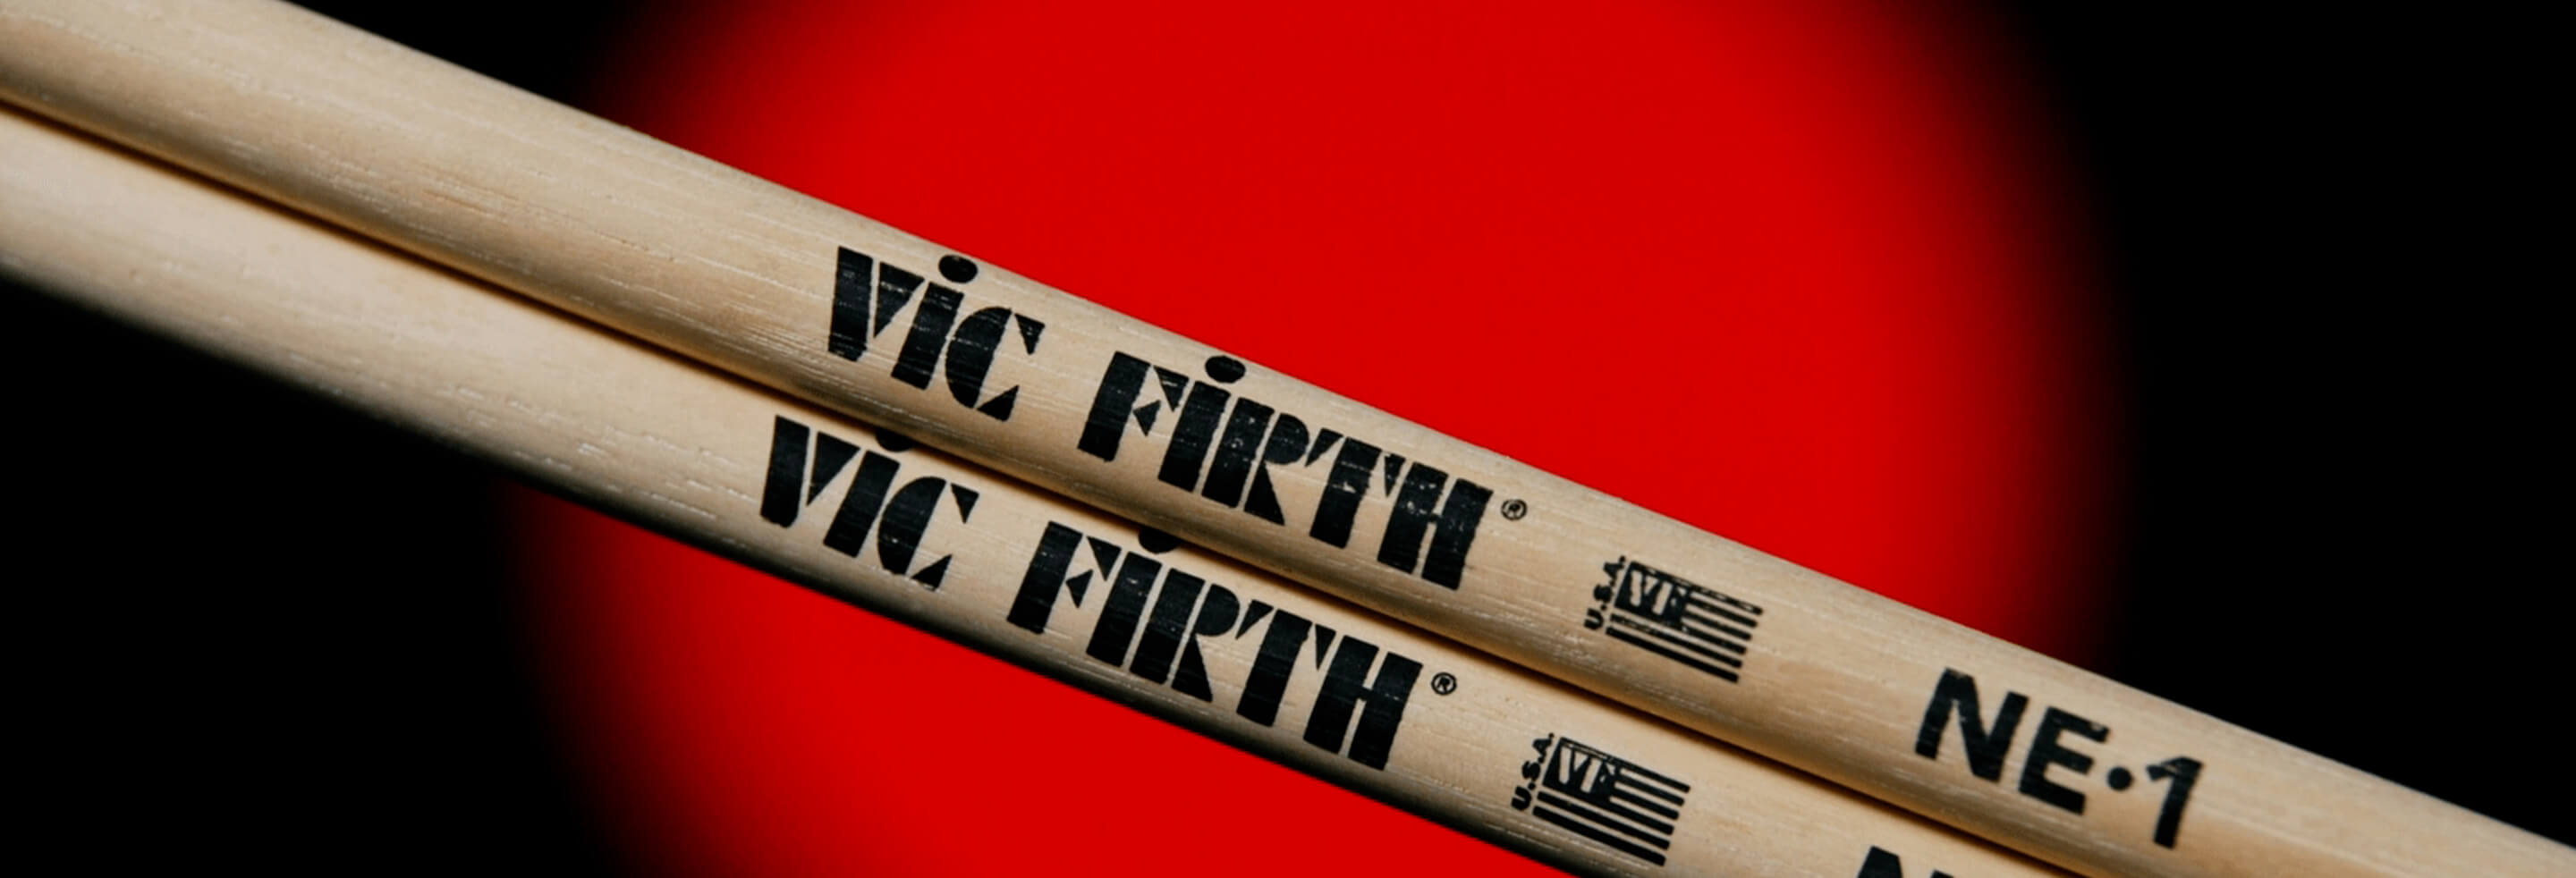 Vic Firth Nate Smith Drumsticks - Timpano-percussion